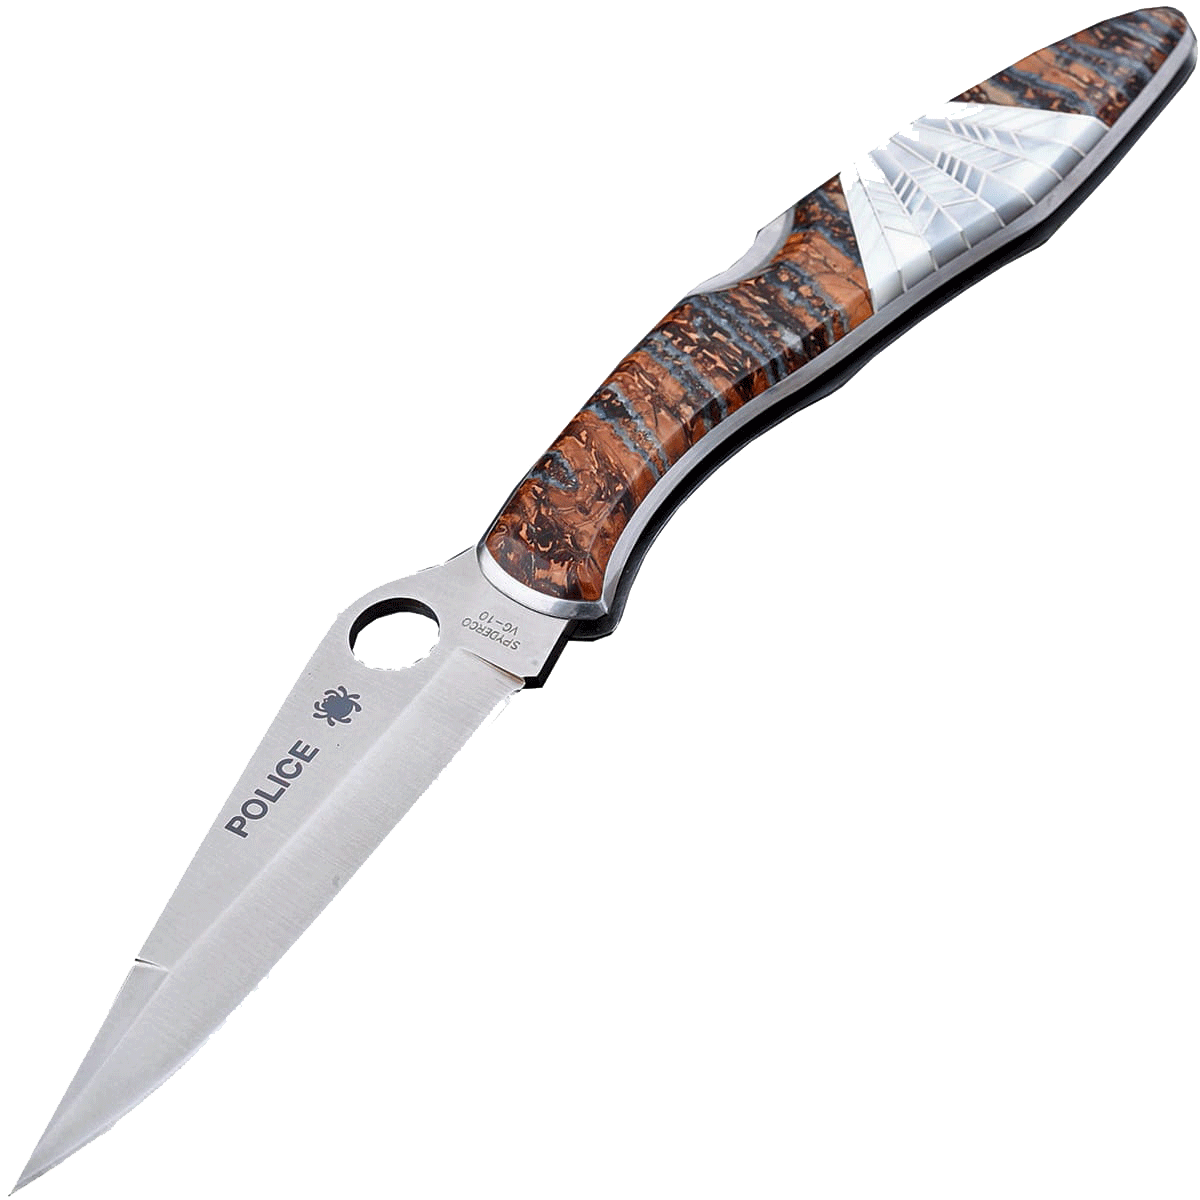 Складной нож Santa Fe Spyderco Police, сталь VG-10, рукоять сталь с накладкой из зуба мамонта/перламутра